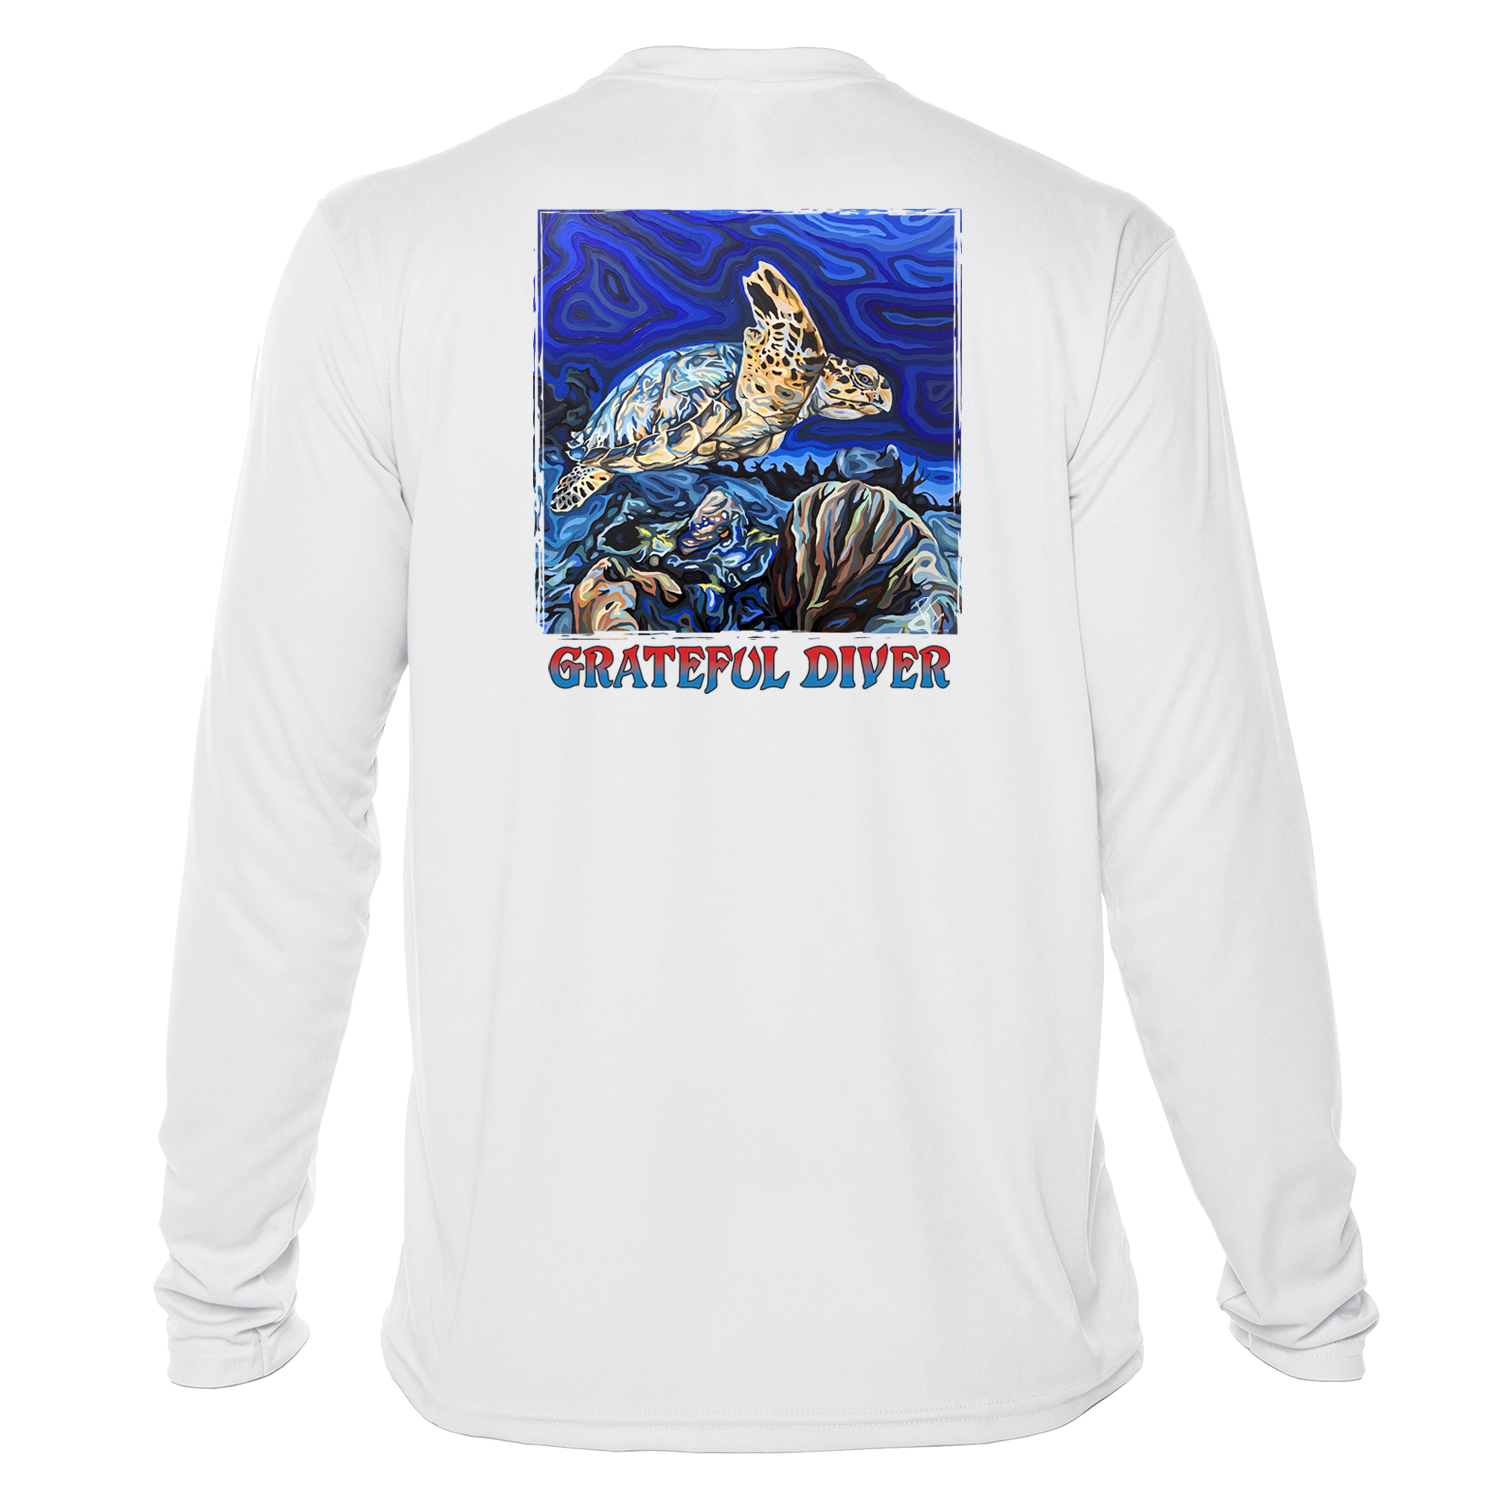 Grateful Diver Artist's Collection by Irina Pushkareva: Hawksbill Turtle UV Shirt in white back shot off figure